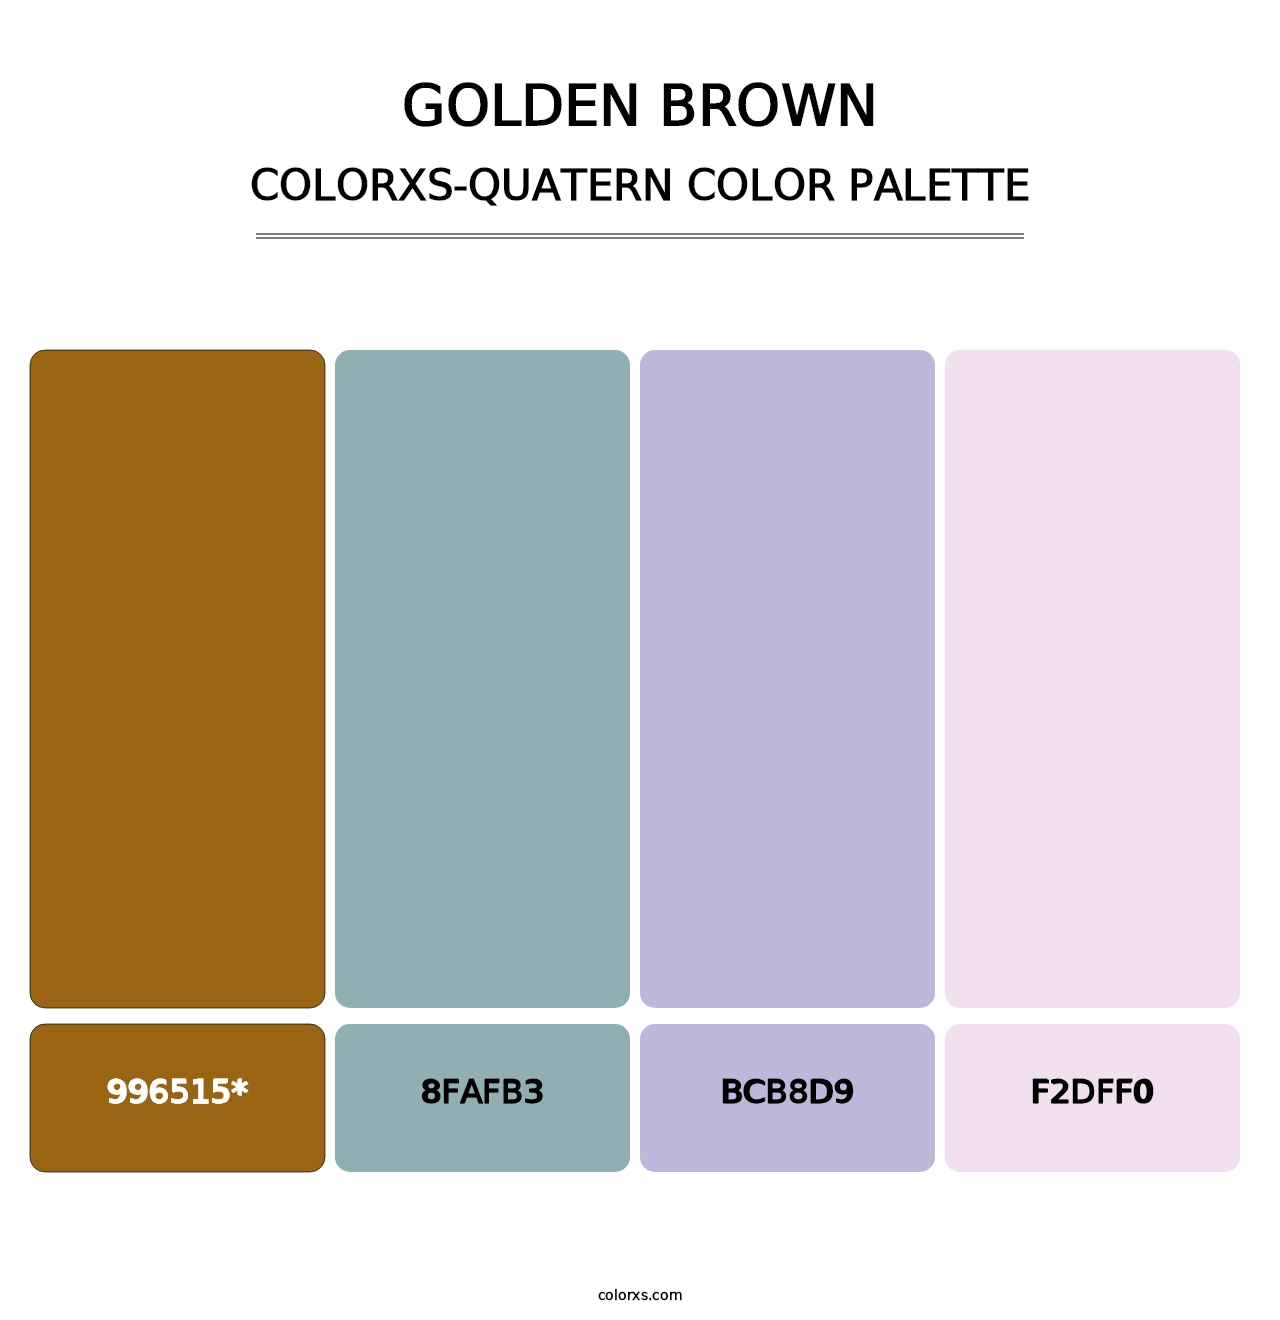 Golden brown - Colorxs Quatern Palette